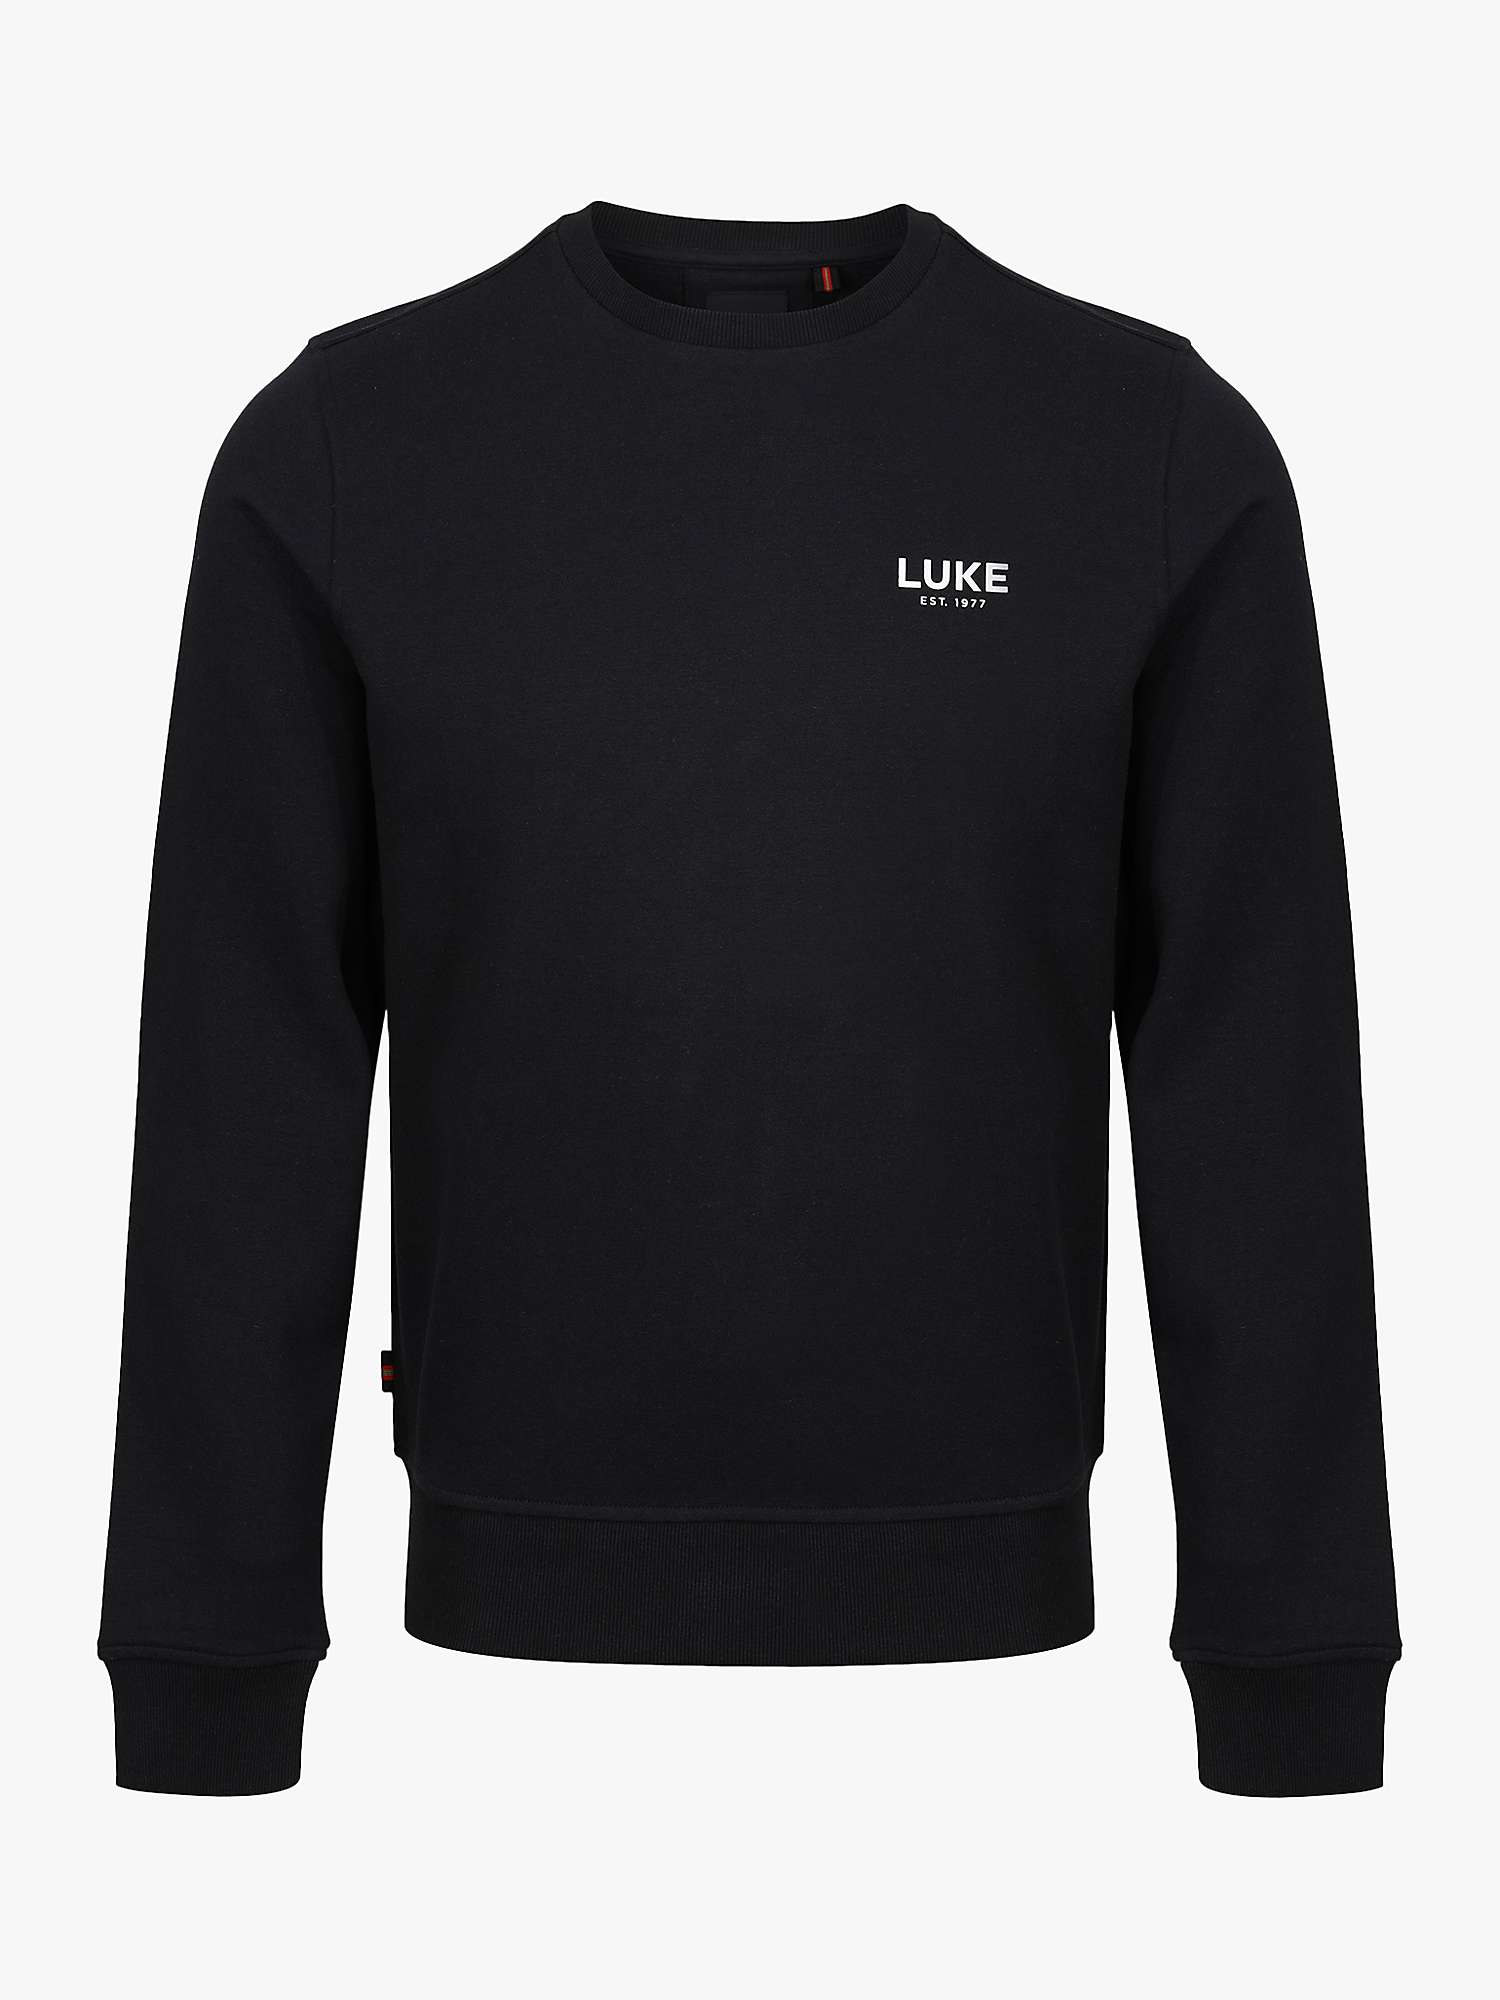 Buy LUKE 1977 Extatic Sweatshirt, Black Online at johnlewis.com